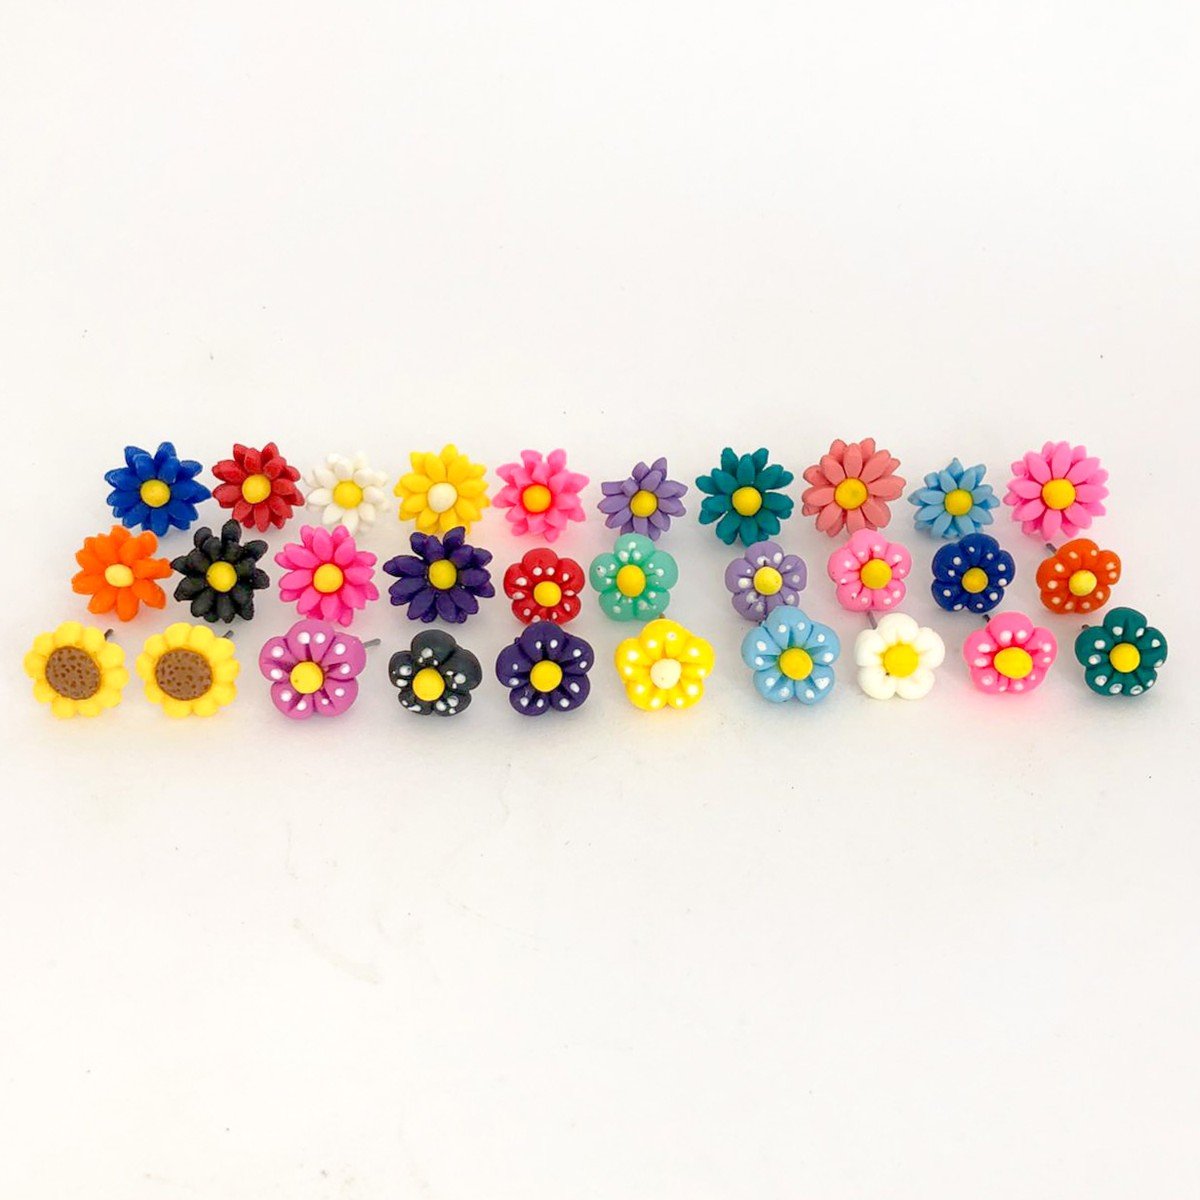 Kit de Mini Biscuit Flores, Margaridas e Girassóis com 30 unidades